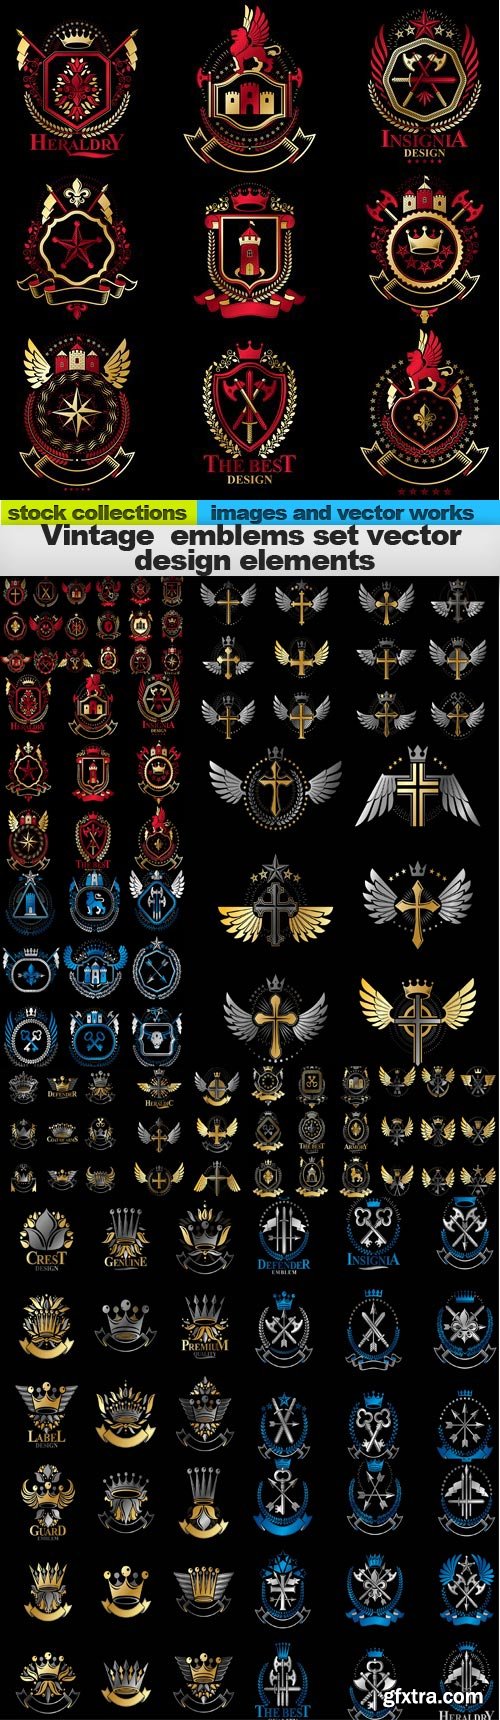 Vintage emblems set vector design elements, 15 x EPS